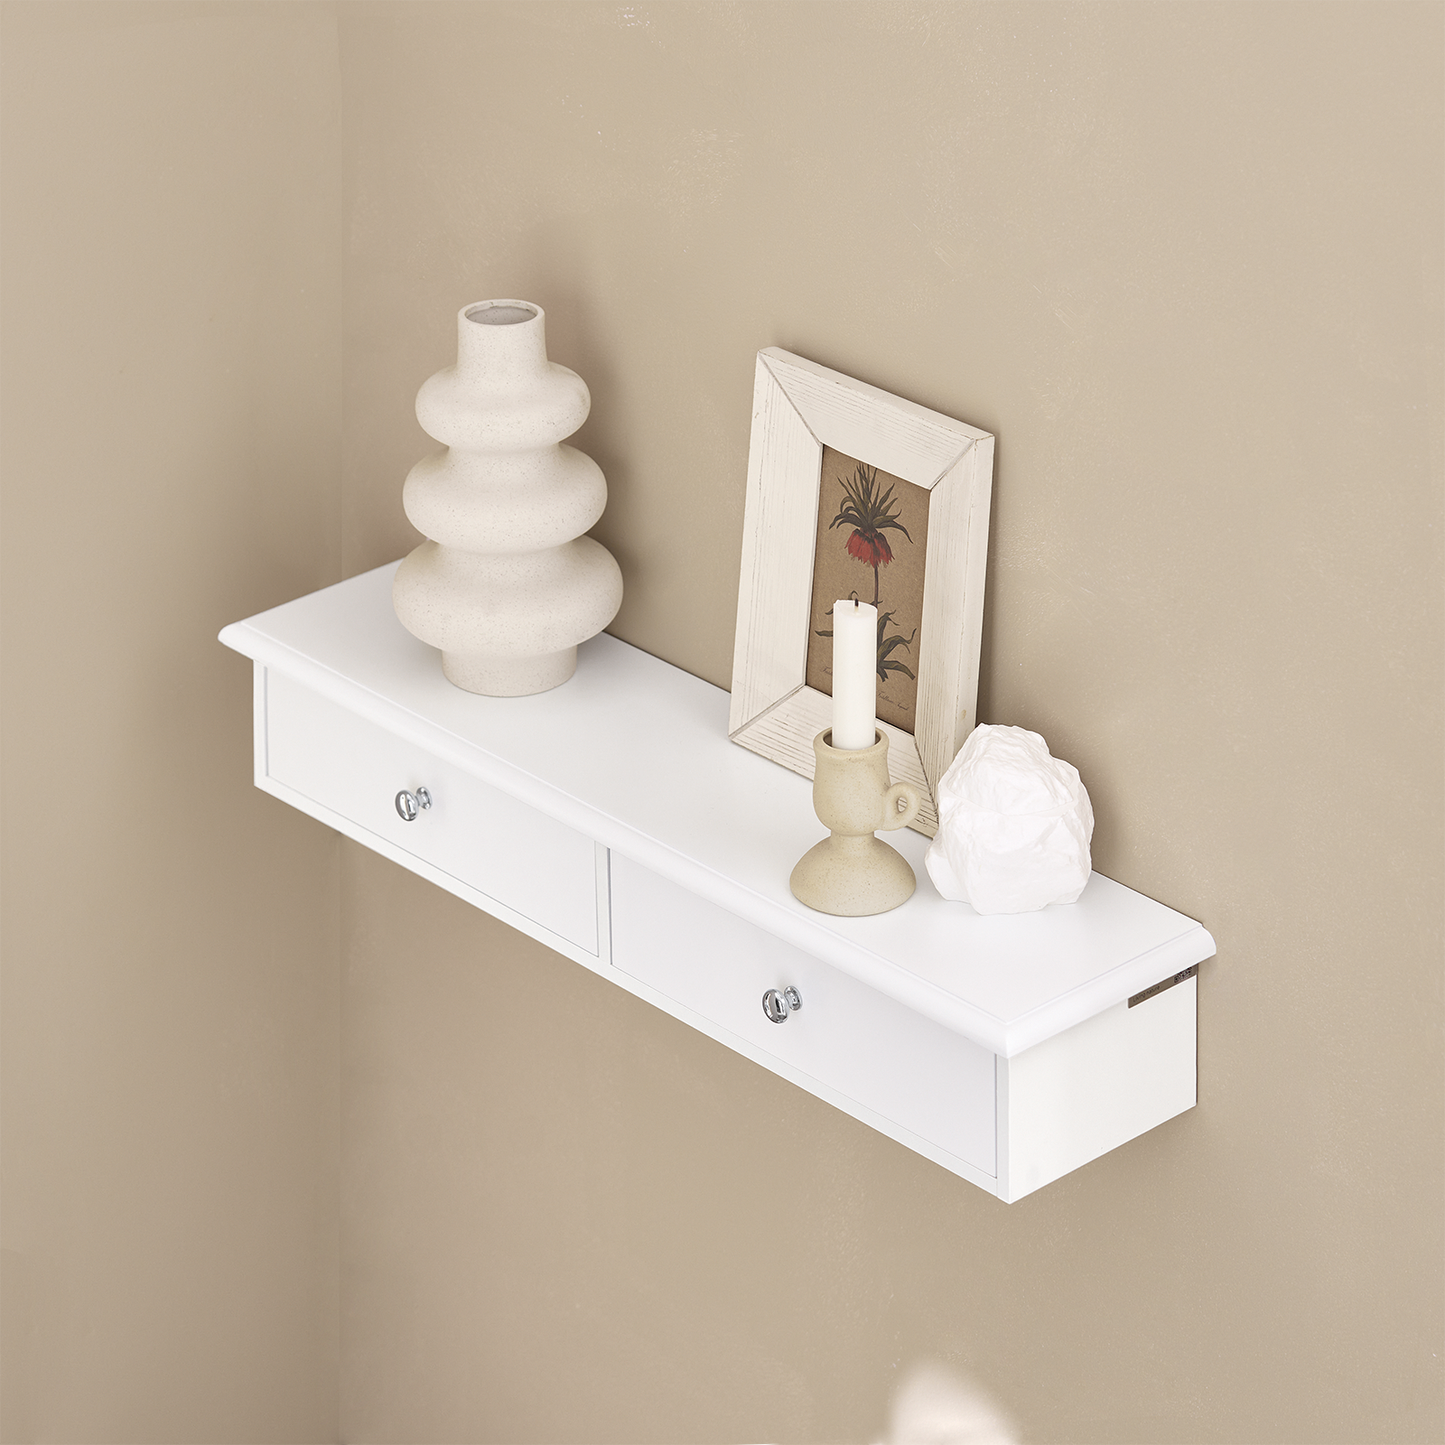 SoBuy Wall Mounted Display Storage Shelf Unit With 2 Drawers (White)